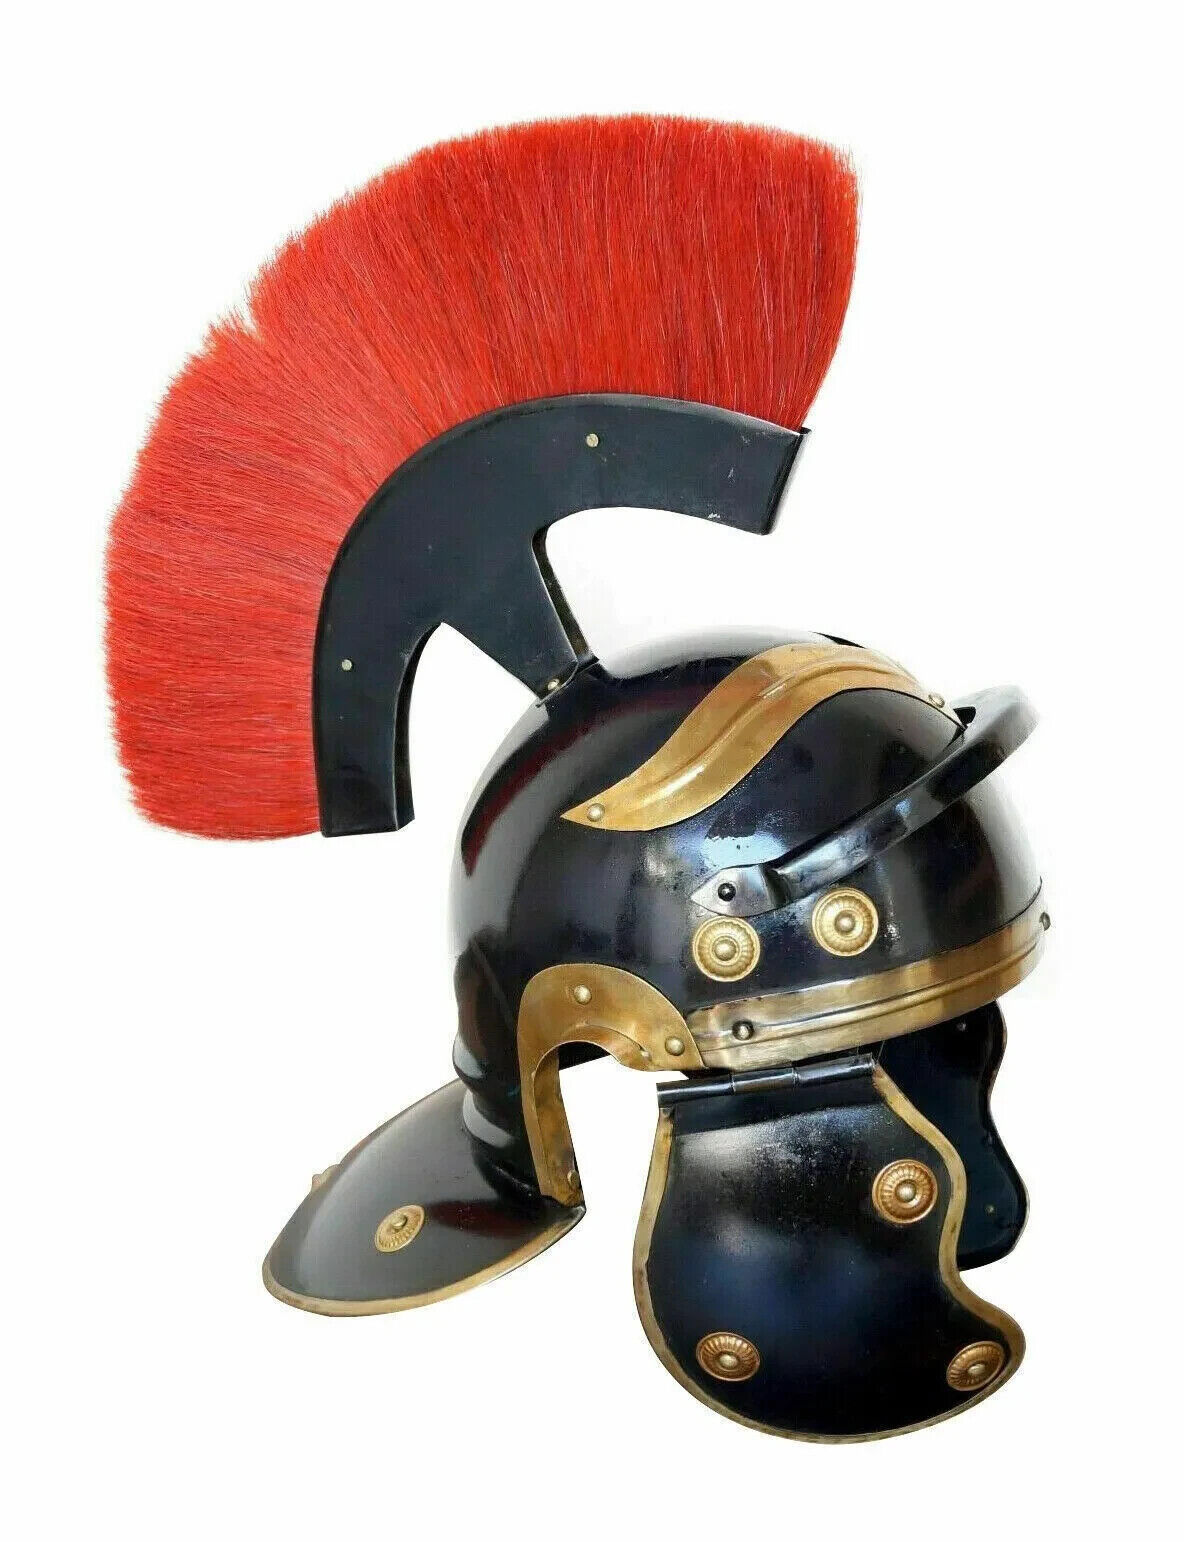 Armour black roman medieval helmet with red plume best designer look item gift